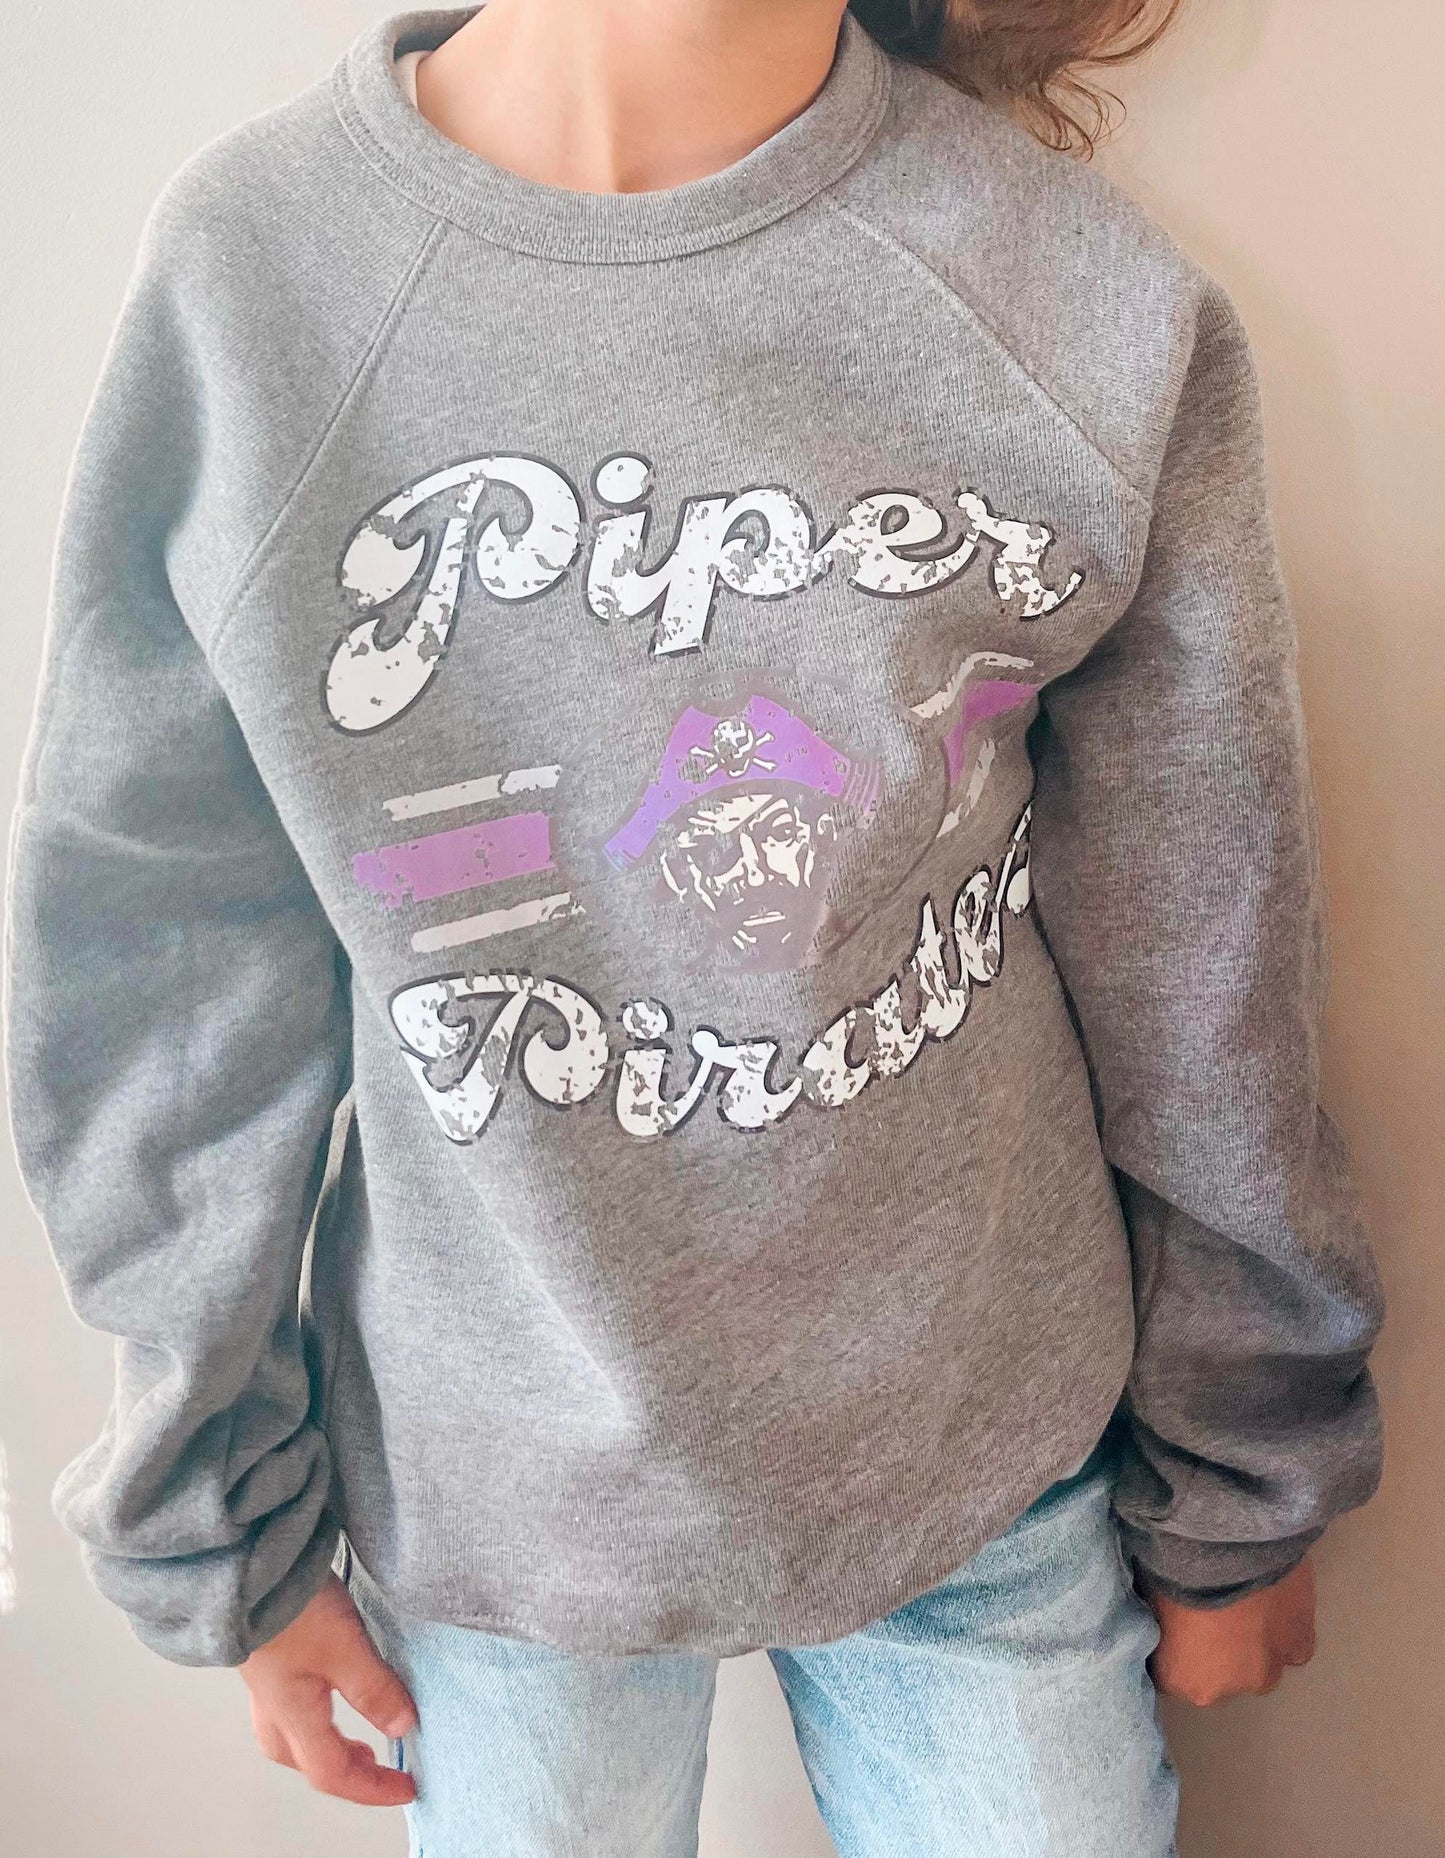 Piper Pirates - Youth Crew Neck Sweatshirt